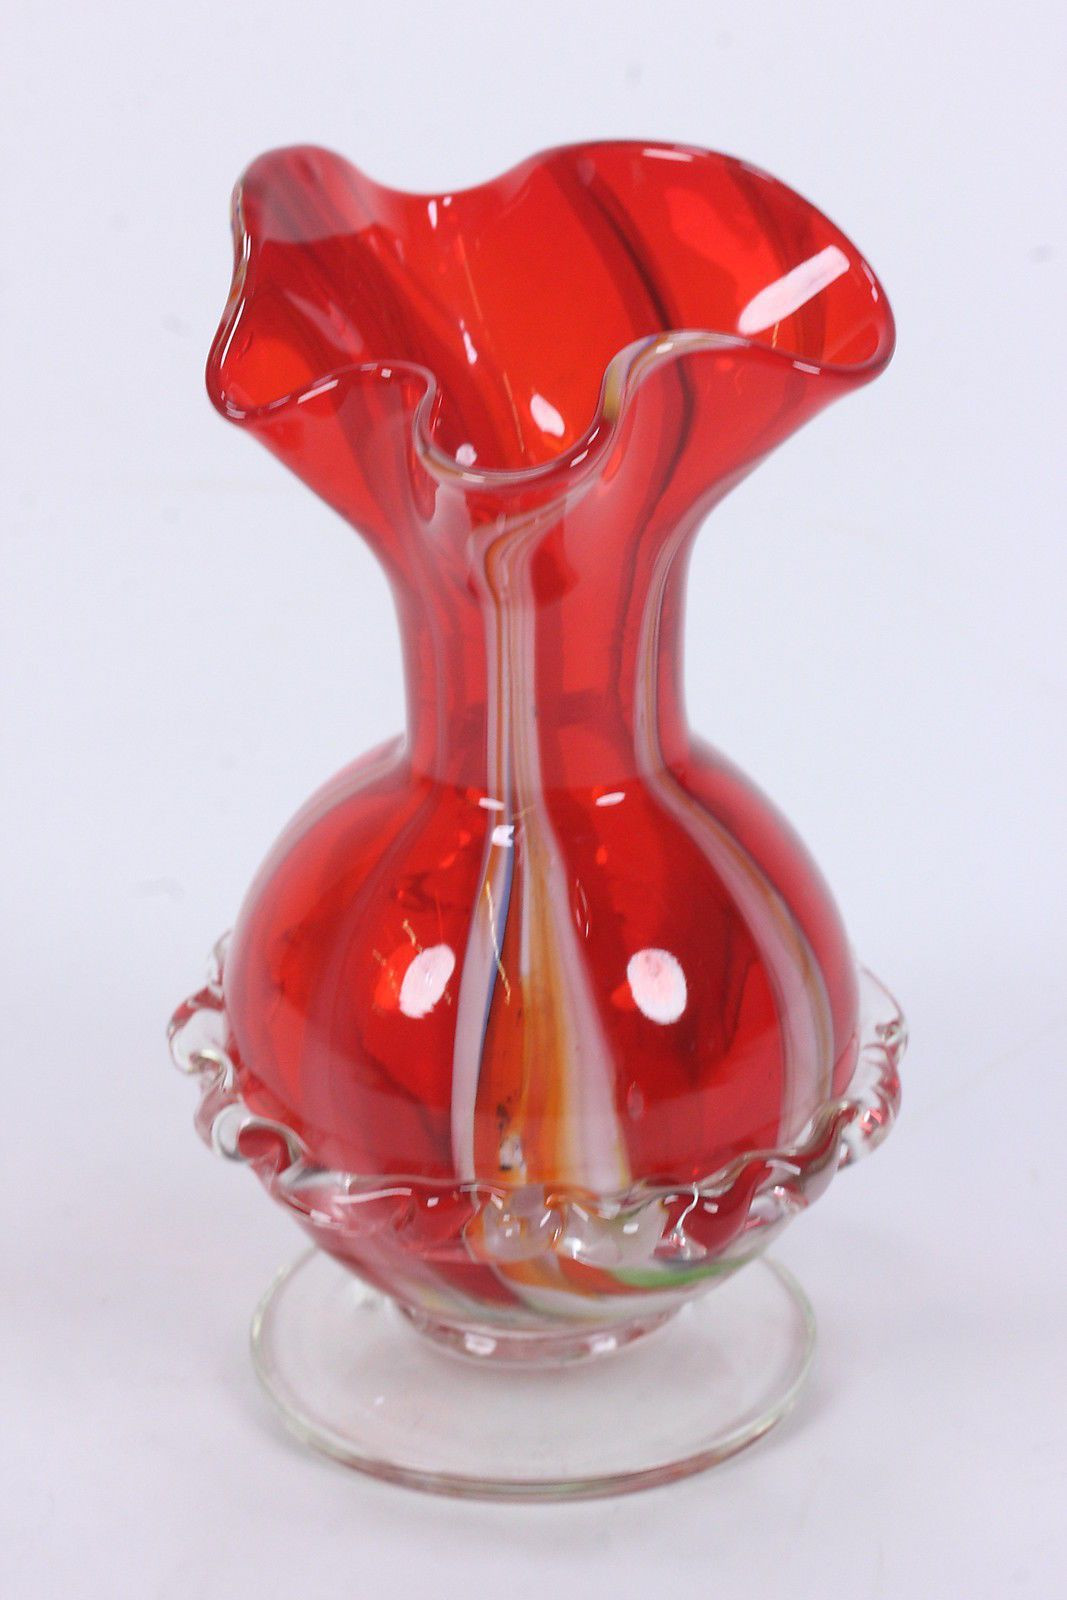 Steuben Glass Vase Vintage Of Red Striped Studio Art Glass Vase Hand Blown 6 1 8 Free form Regarding Red Striped Studio Art Glass Vase Hand Blown 6 1 8 Free form Ruffled